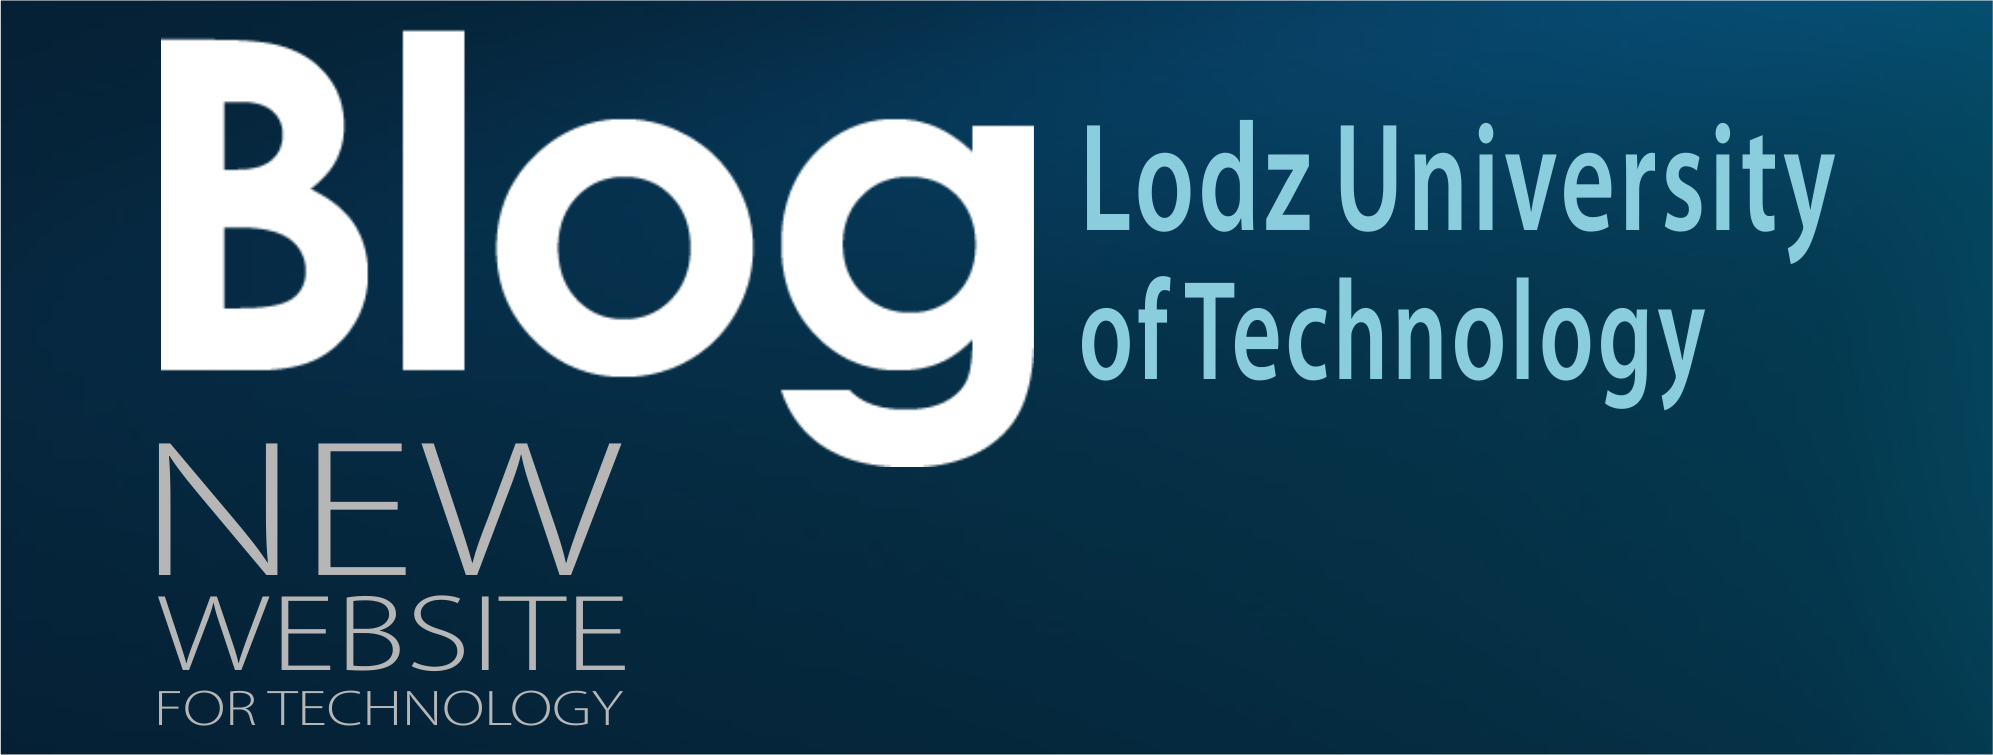 Blog of Lodz University of Technology